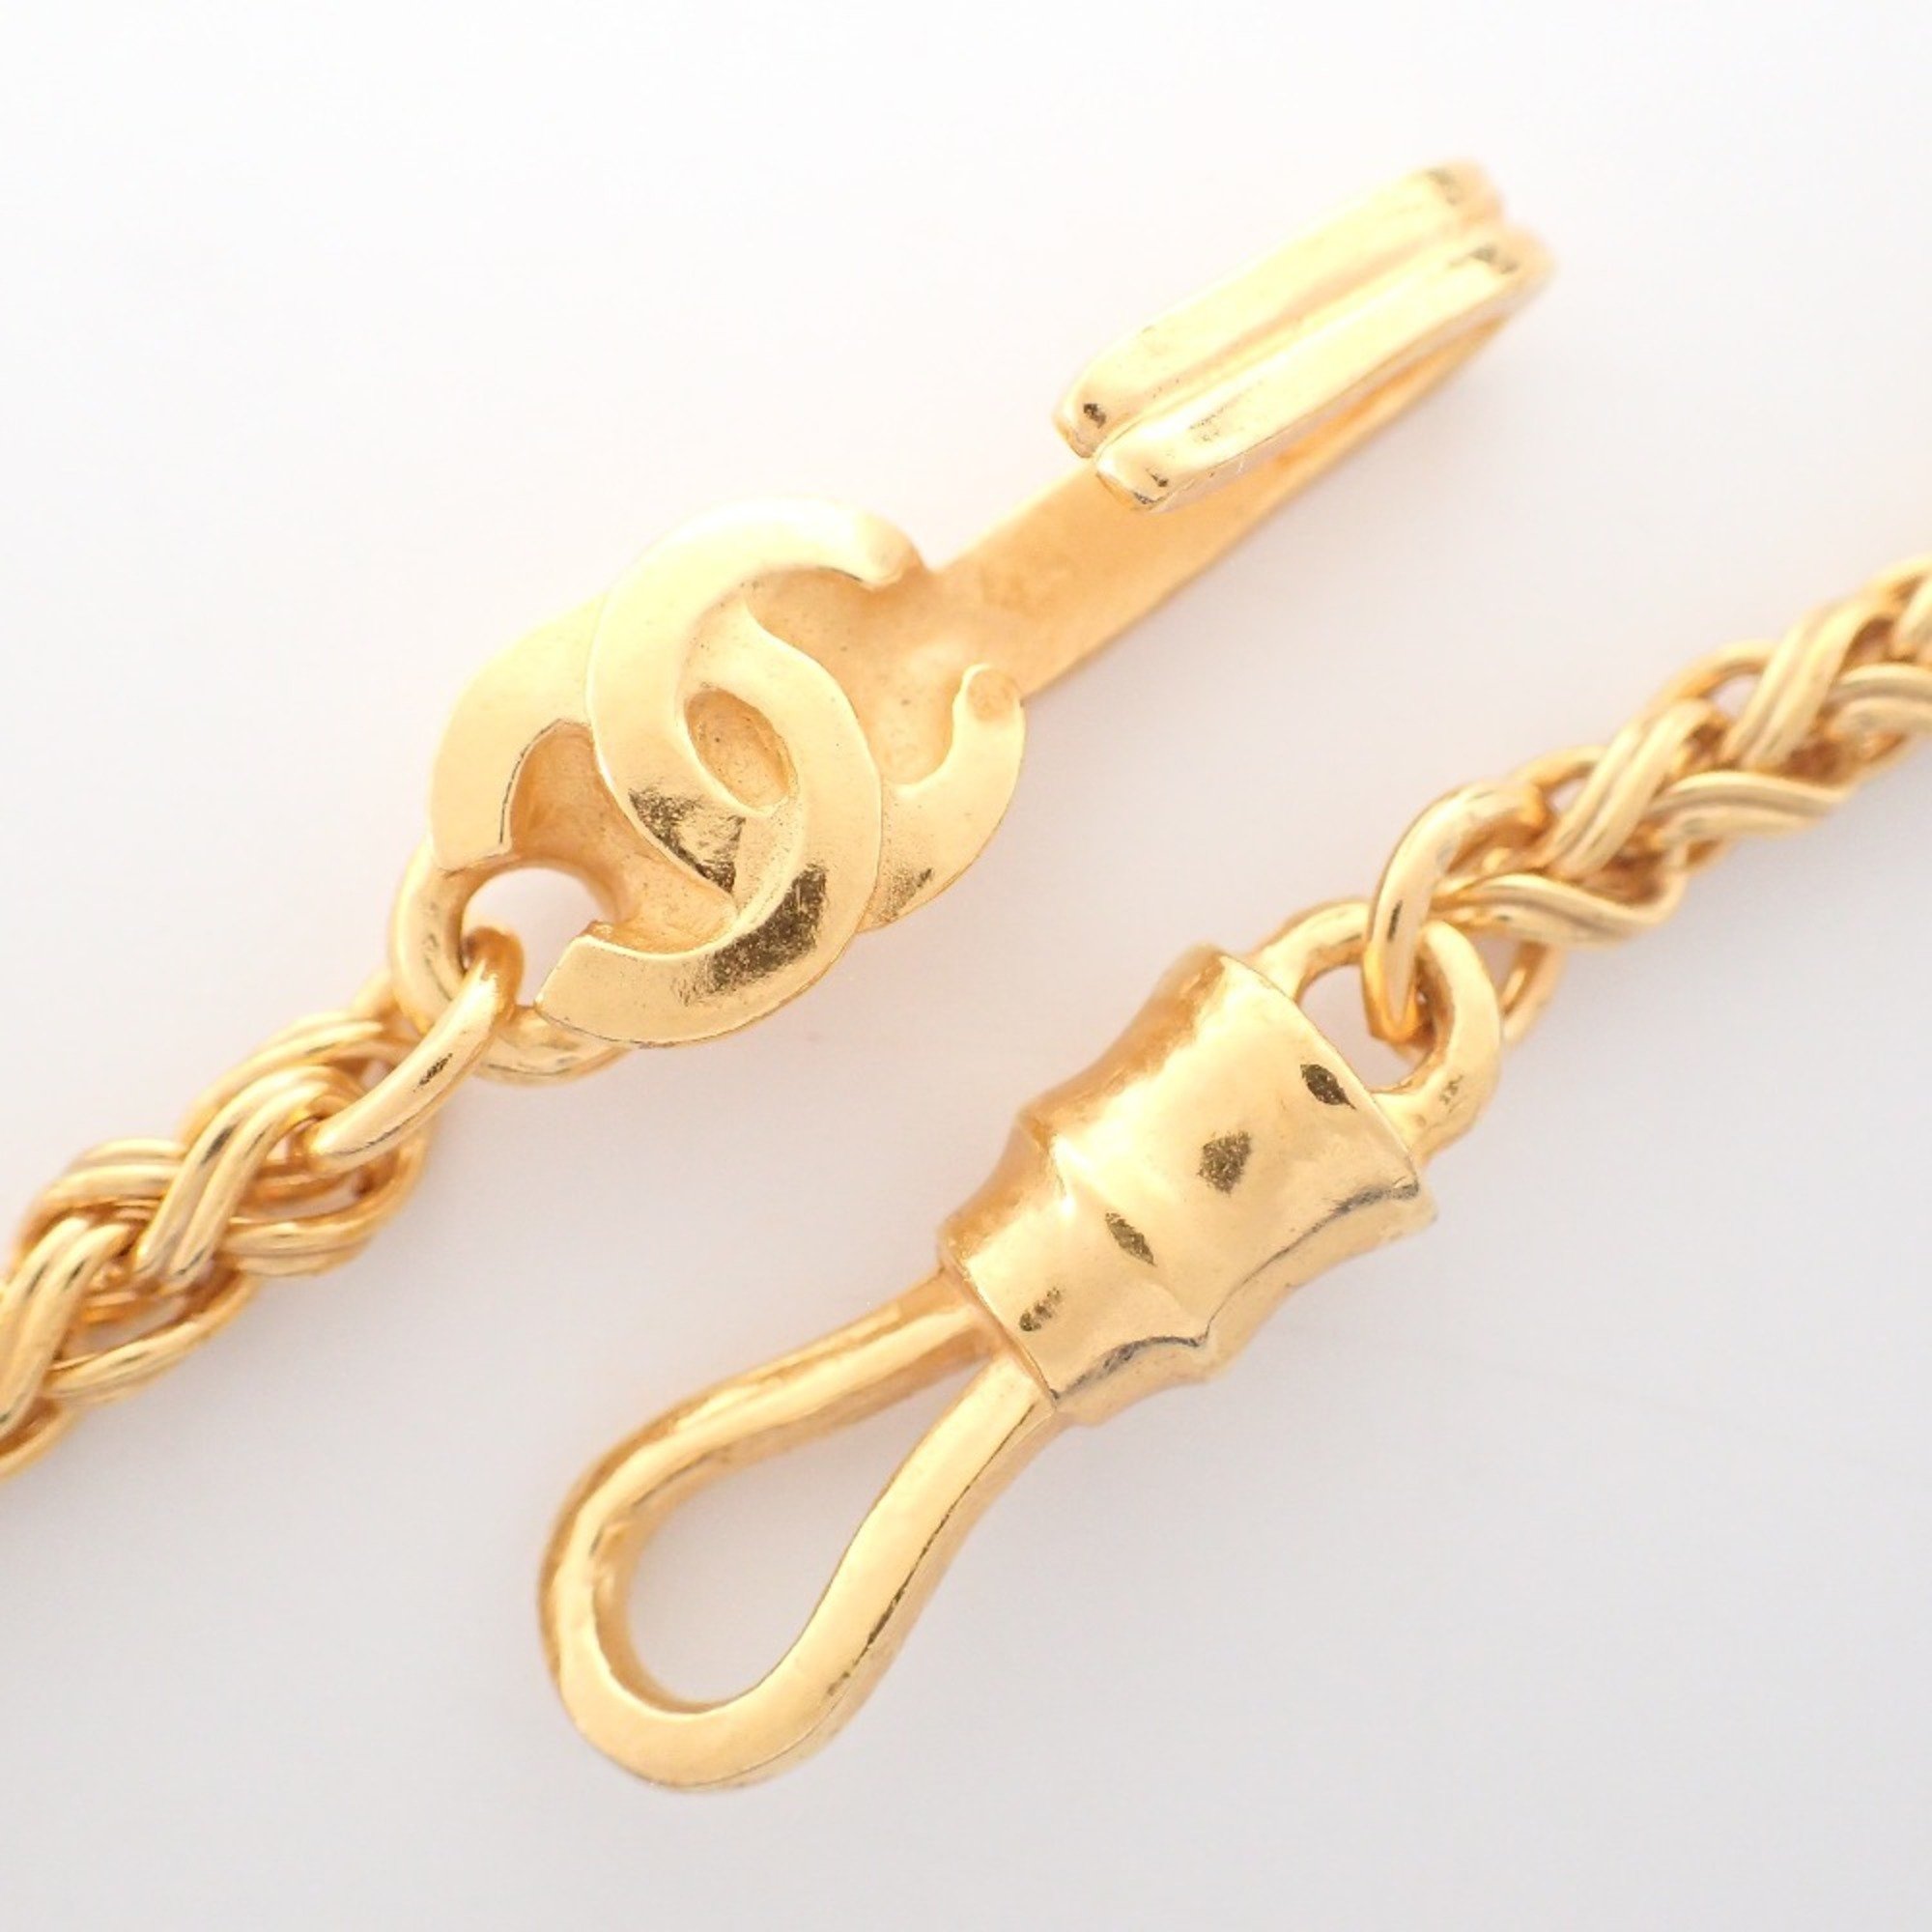 CHANEL 97A CC Coco Mark Chain Necklace Gold Women's